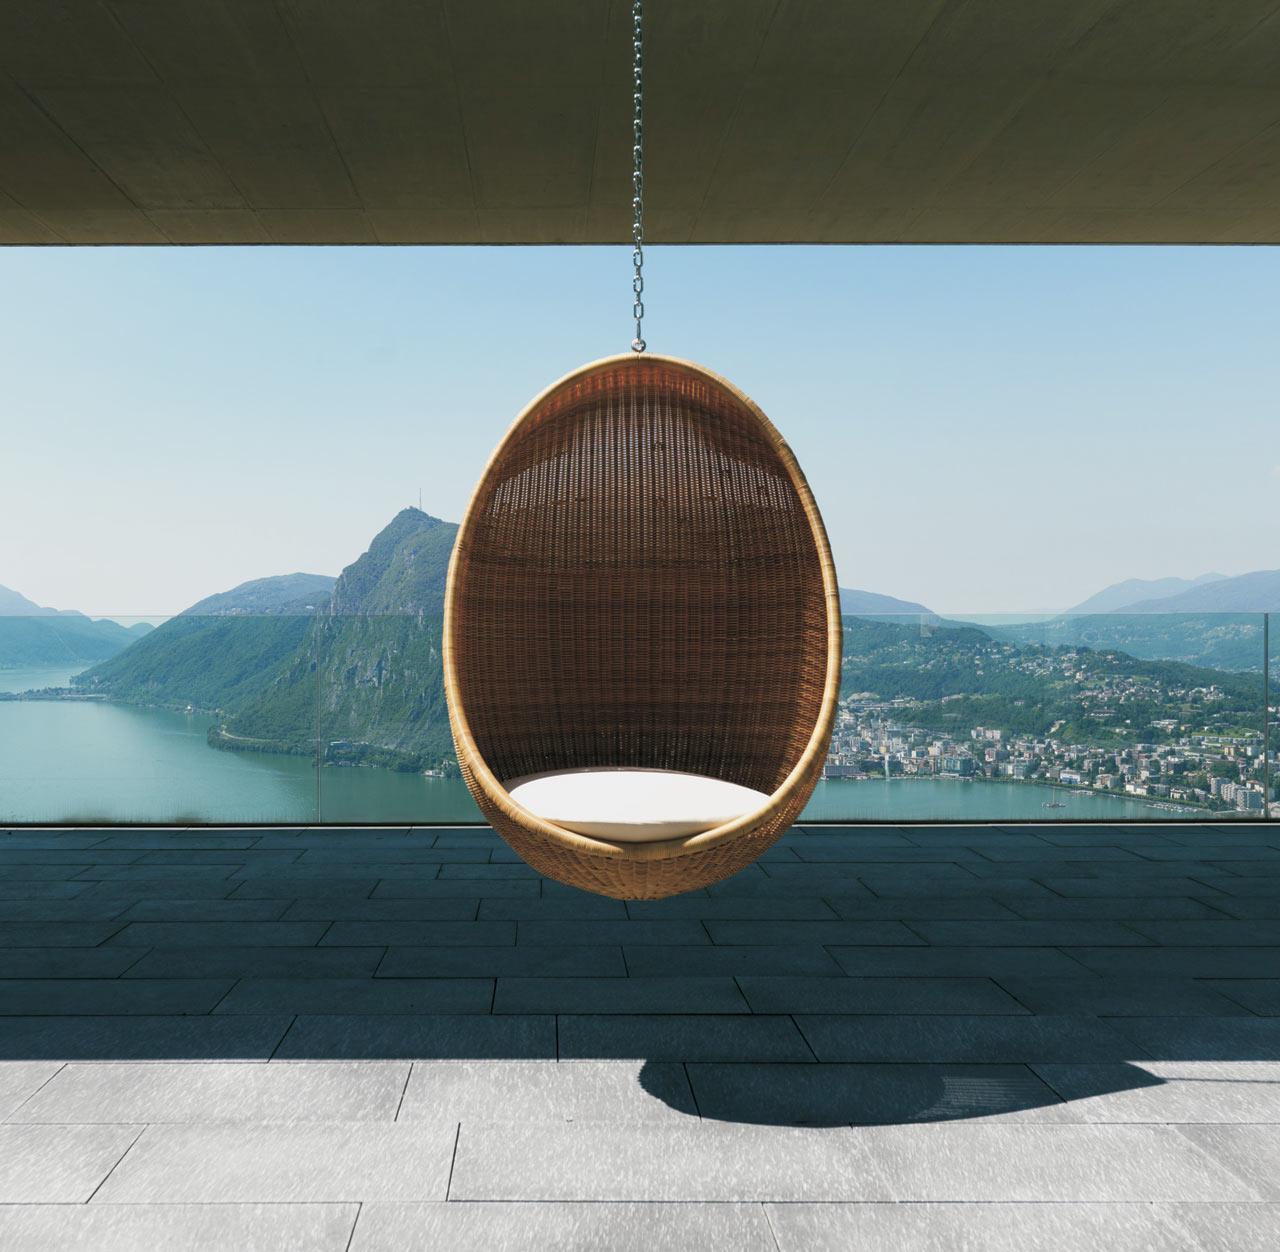 1950s Nanna & Jorgen Ditzel design hanging outdoor egg chair, high quality, elegant and timeless design.